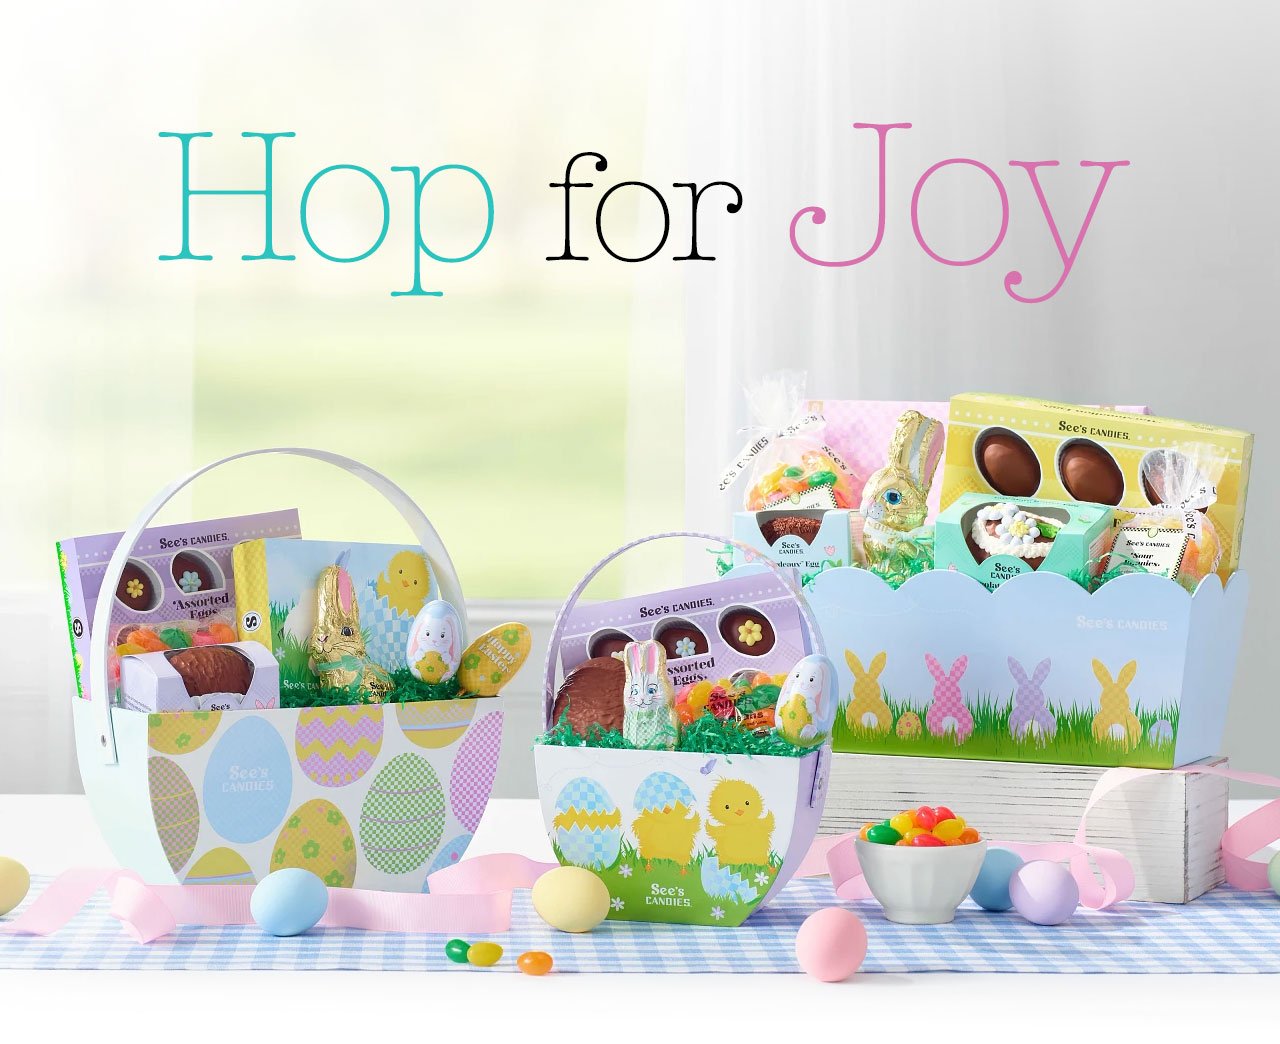 Hop for Joy